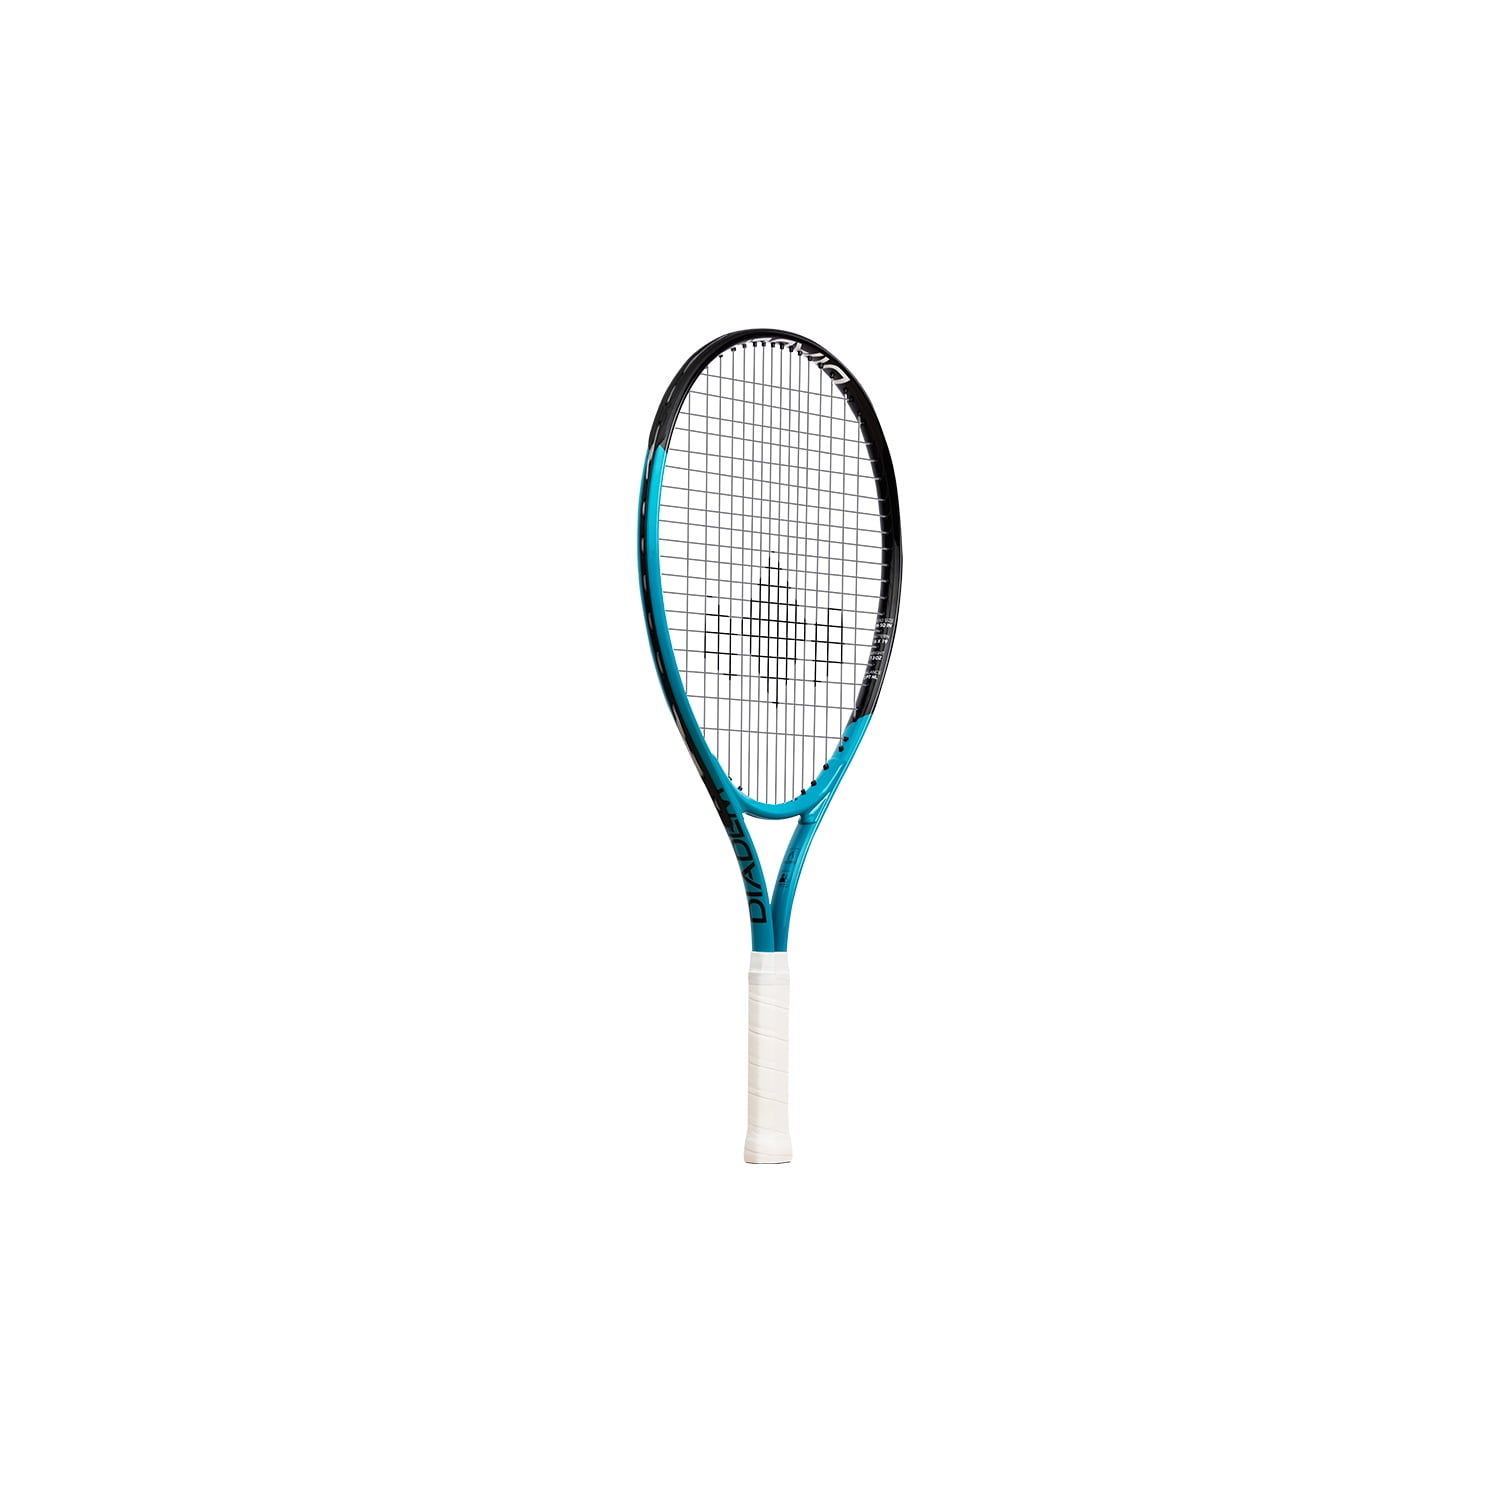 Diadem Sports Super 23" Junior Tennis Racket in Teal, Pre-Strung, Grip Size 0,7.5oz